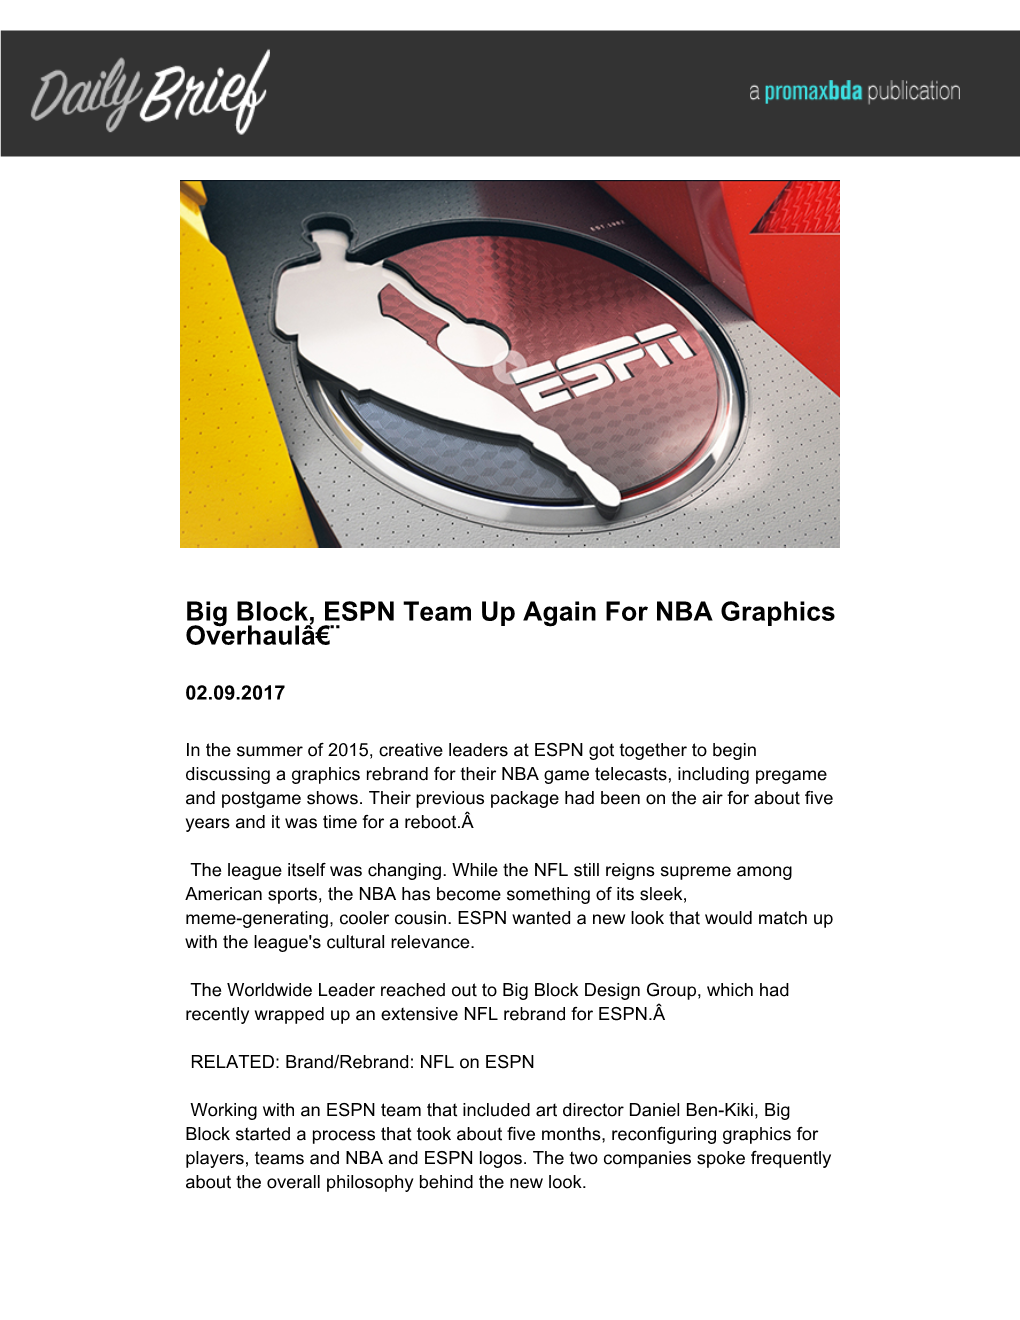 Big Block, ESPN Team up Again for NBA Graphics Overhaulв€Ё